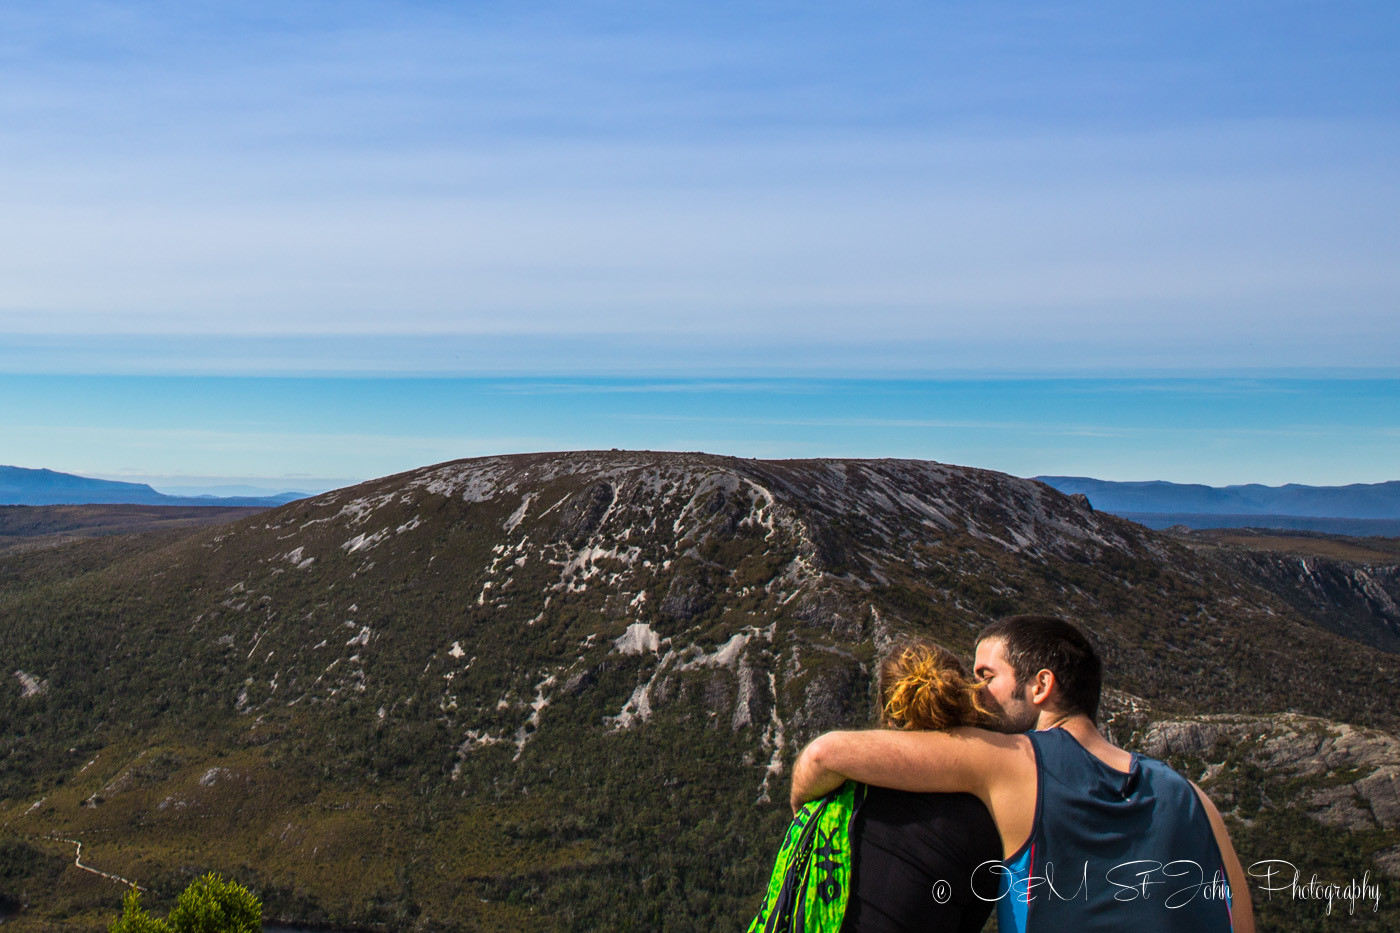 Couples Vacation: Max and Oksana at the Cradle Mountain National Park. Tasmania. Australia